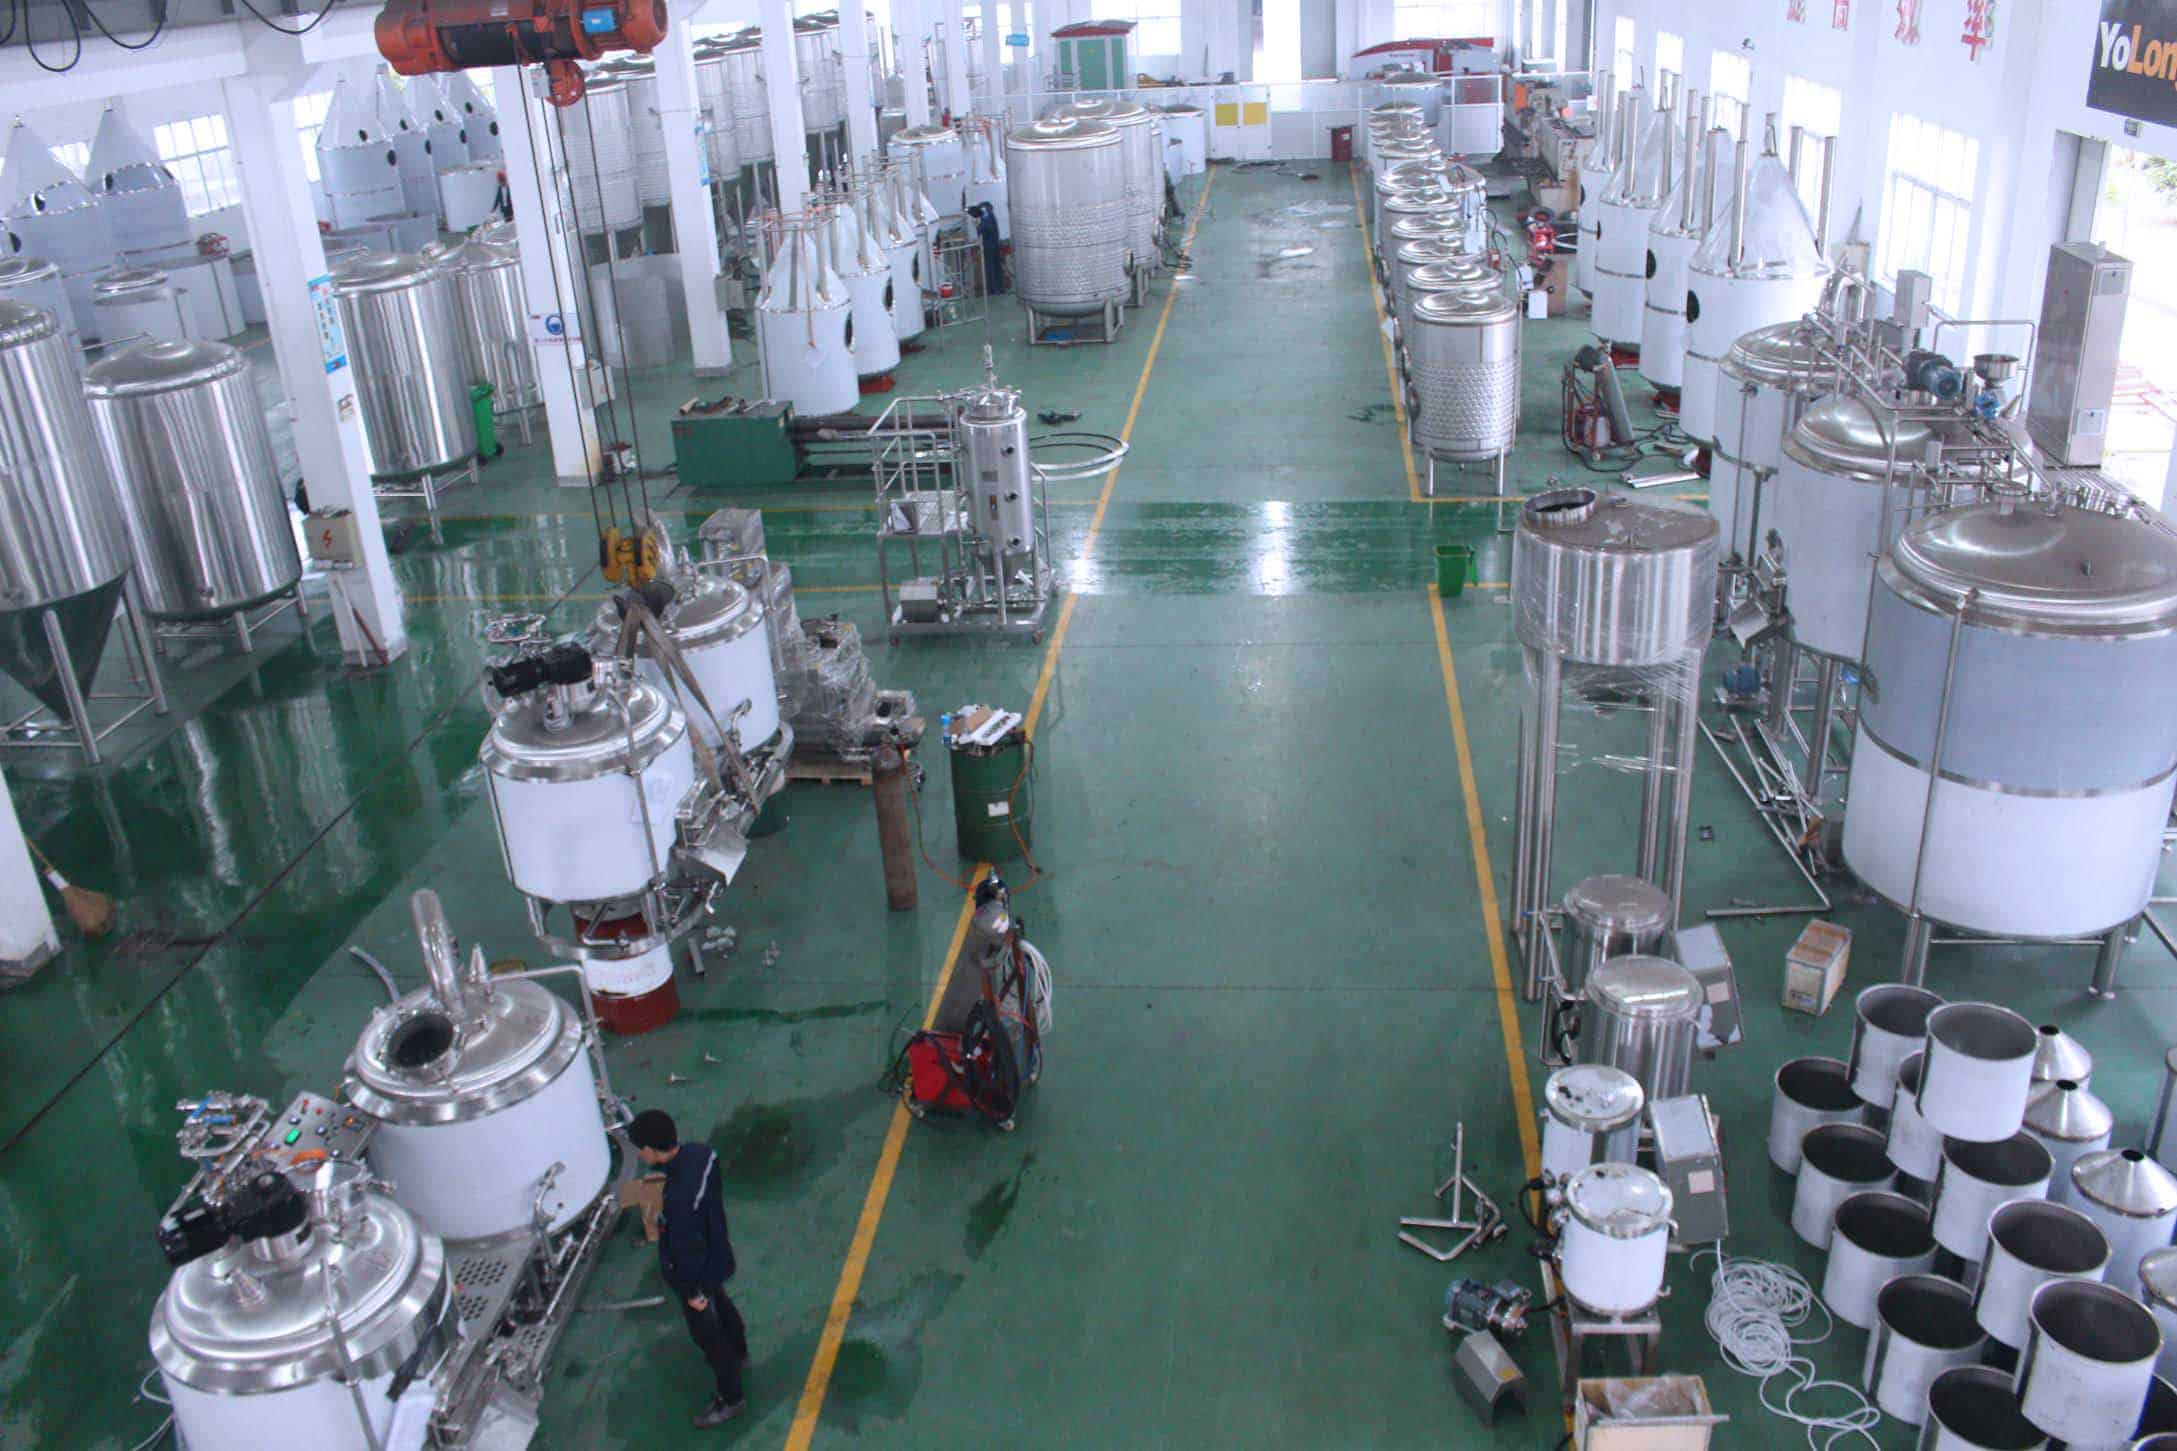 YoLong Brewery workshops